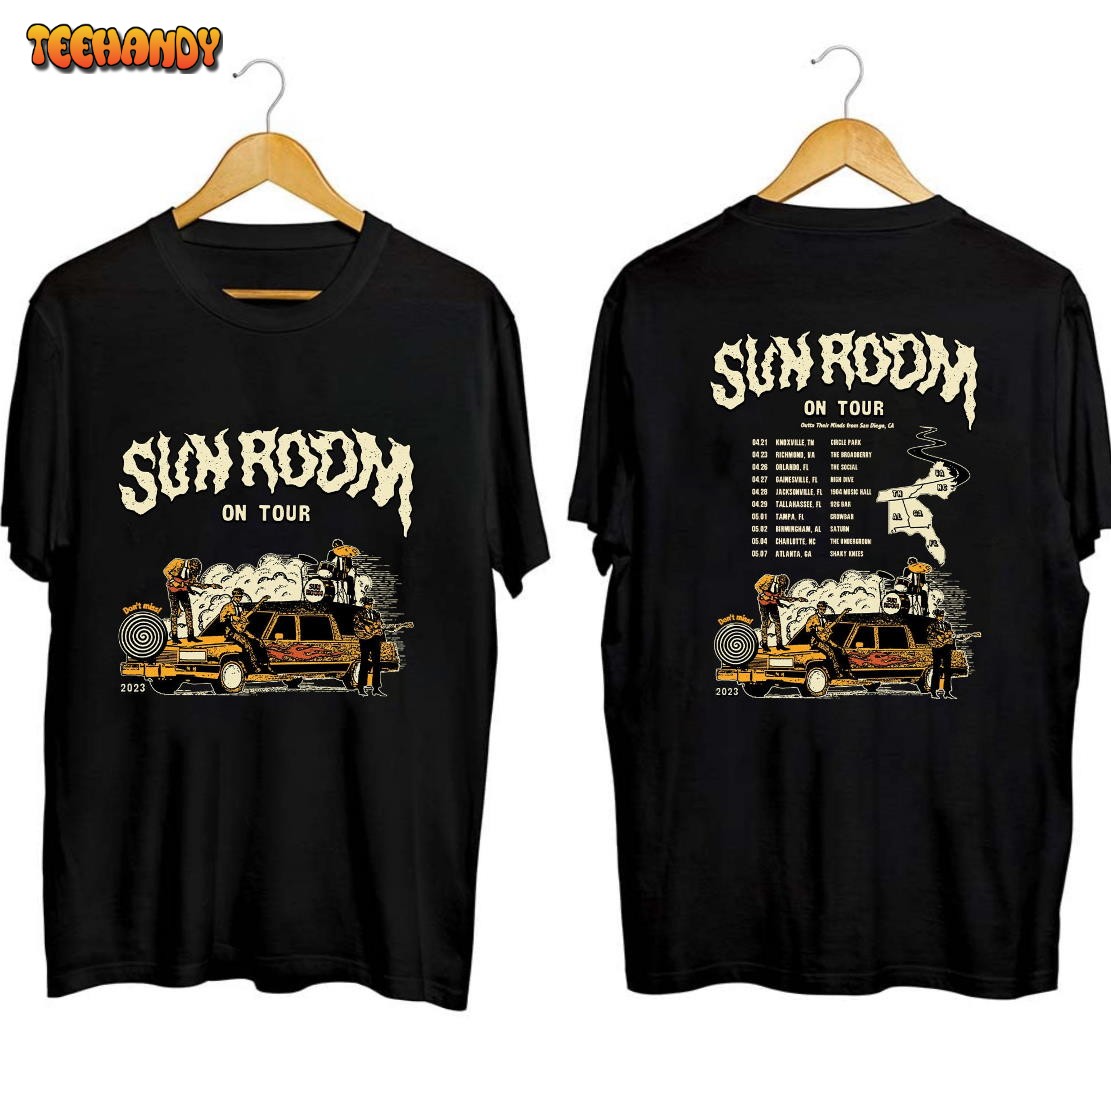 2023 Tour Concert Sun Room Band Unisex T Shirt